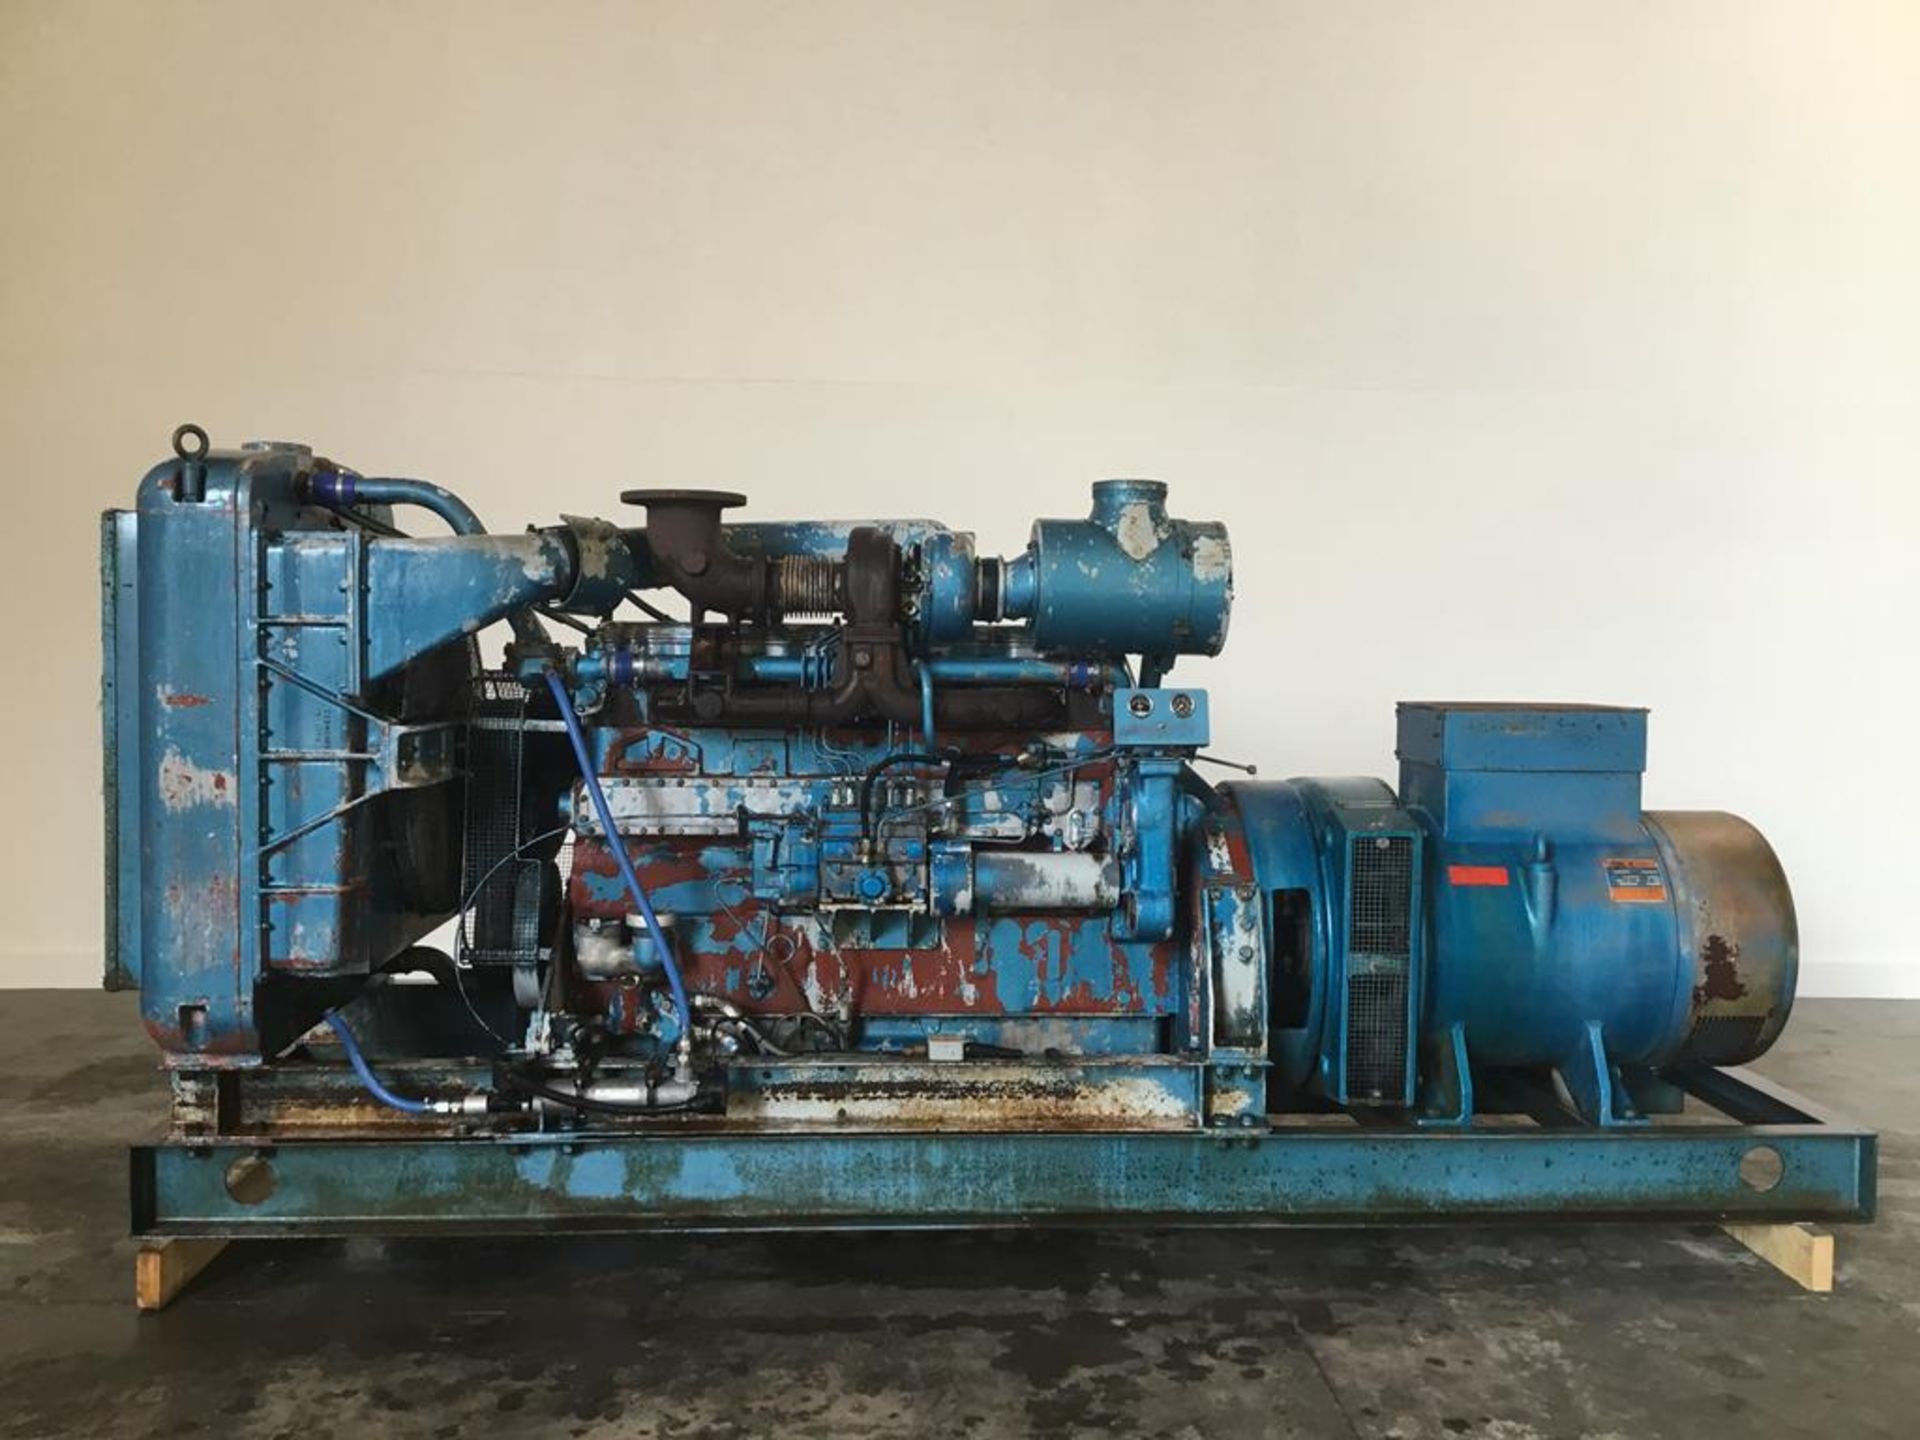 Dorman 325Kva Diesel Generator - Image 8 of 9